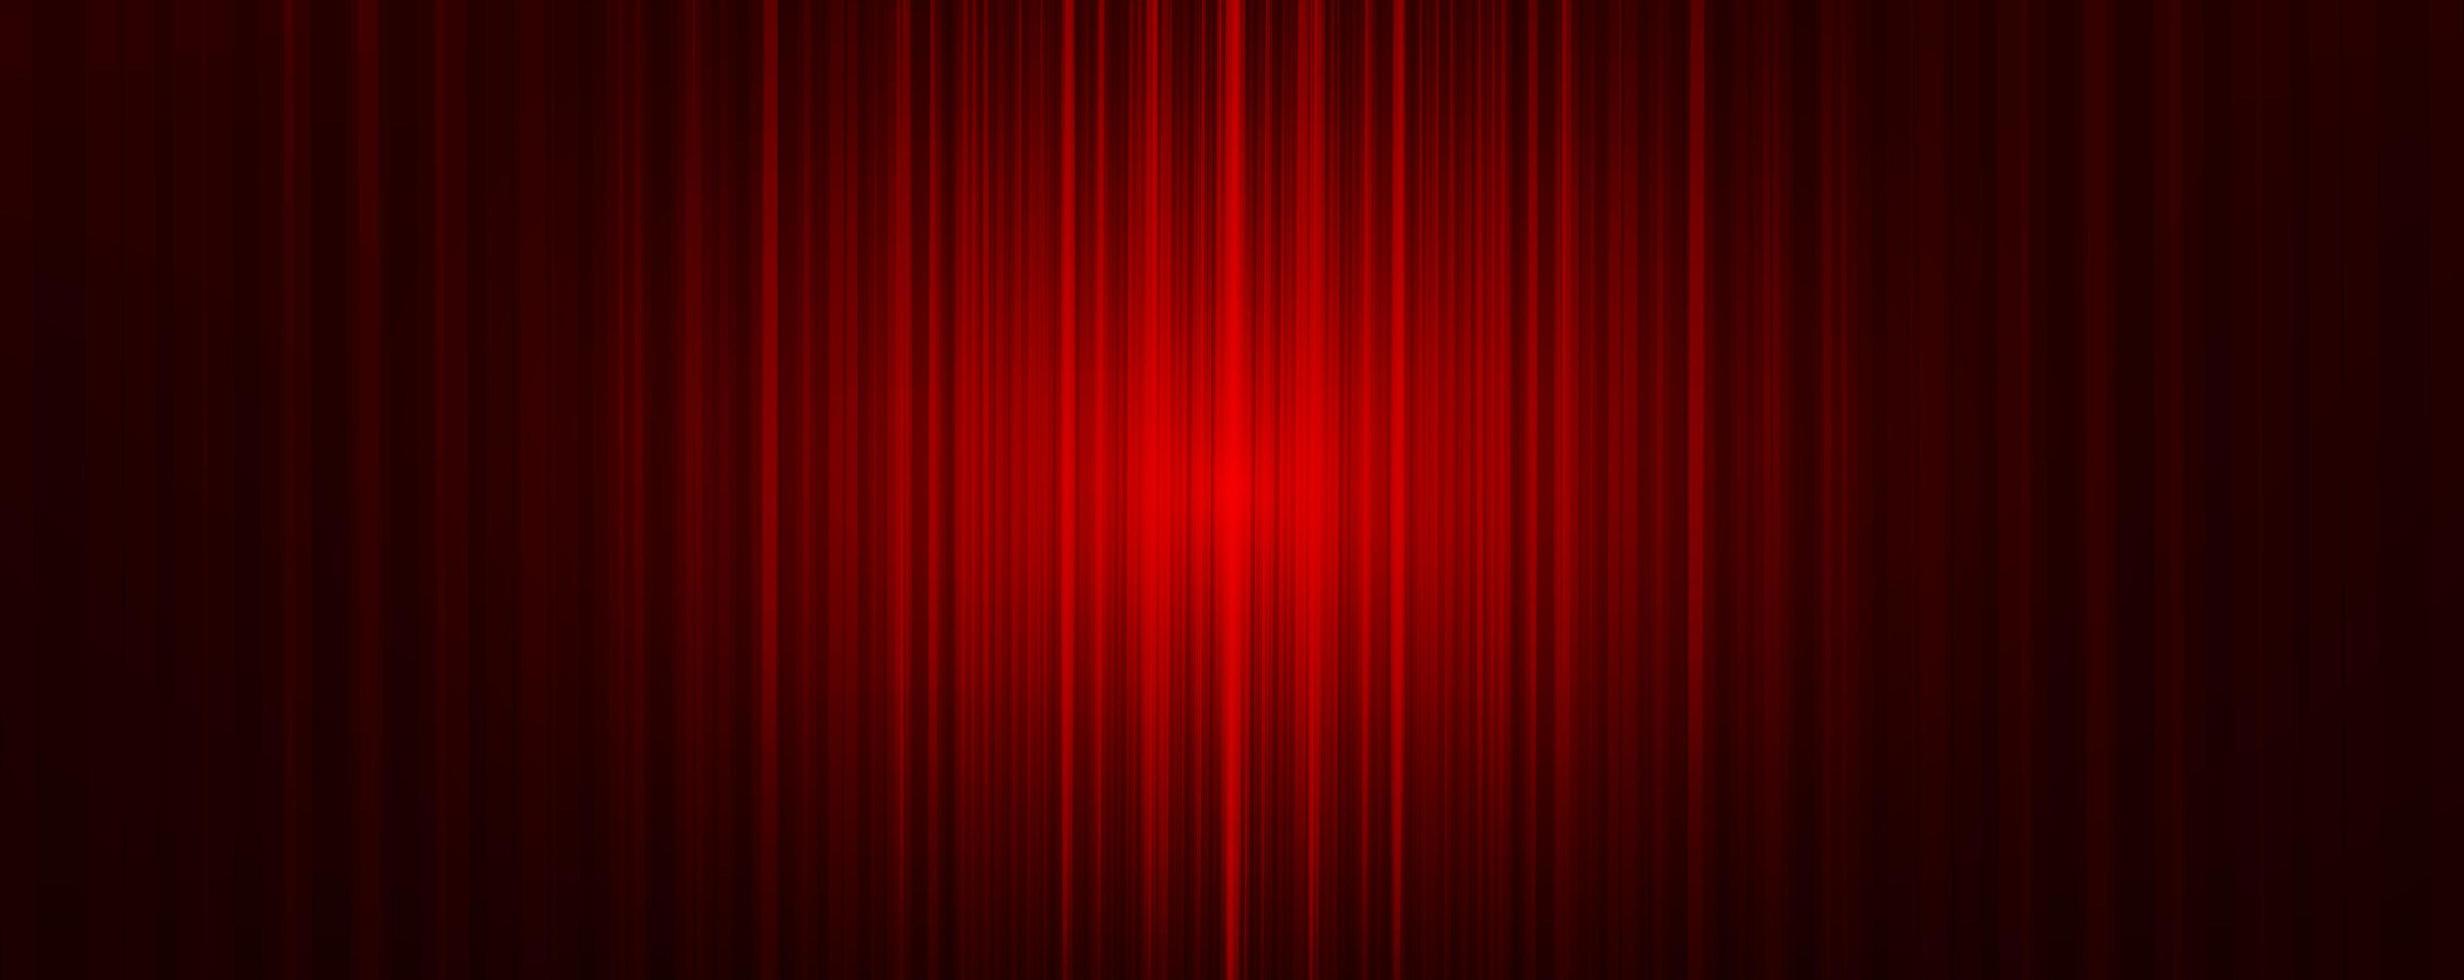 vektor röd gardin med ljus scen bakgrund, modern stil.